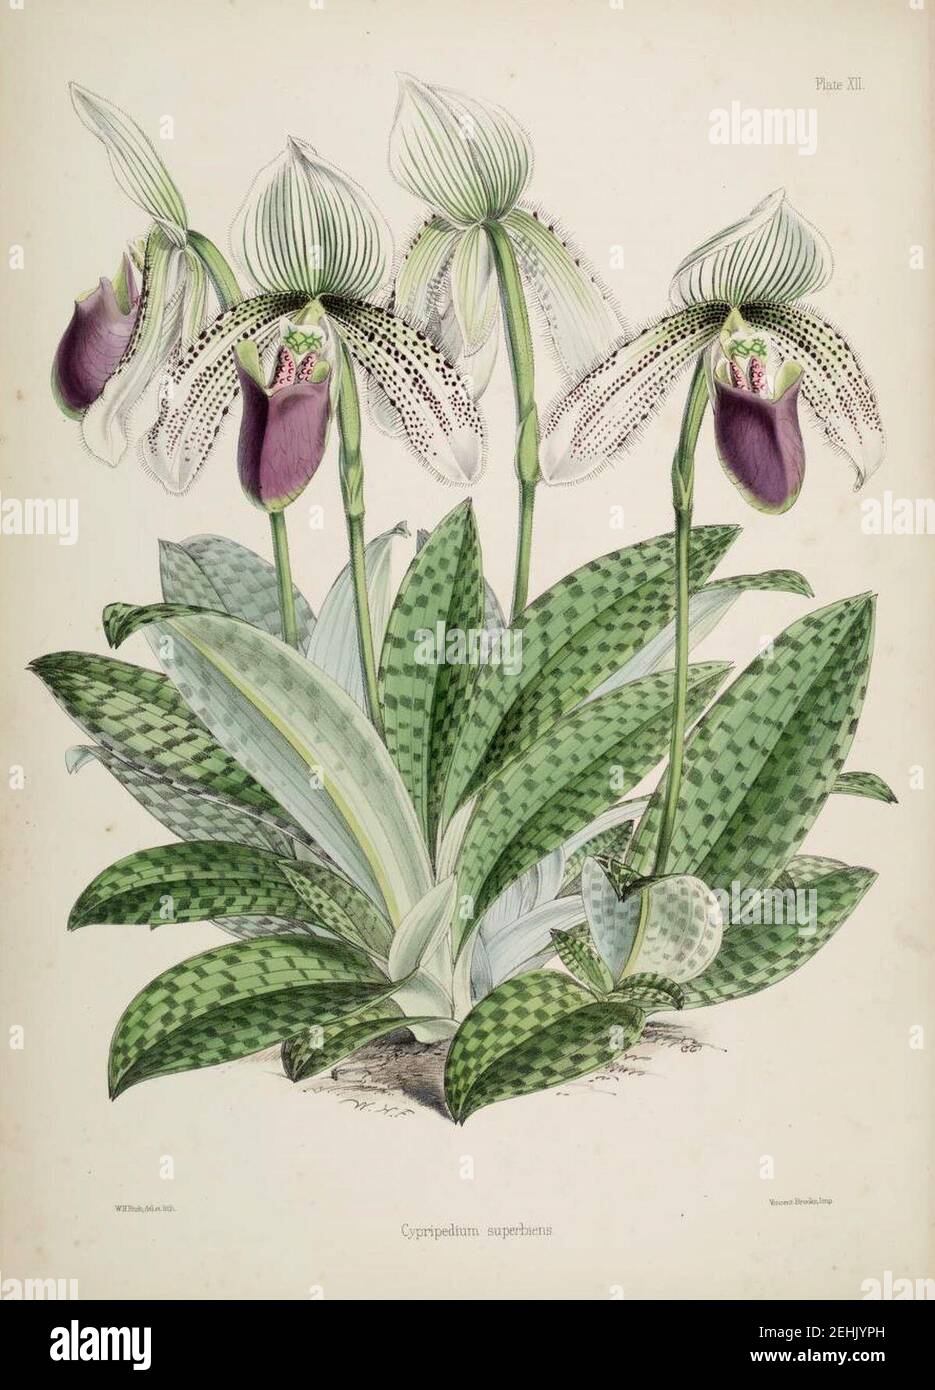 Paphiopedilum superbiens (as Cypripedium s.) Warner, Williams - Select orch. pl. 2nd pl. 12 (1865-1875). Stock Photo